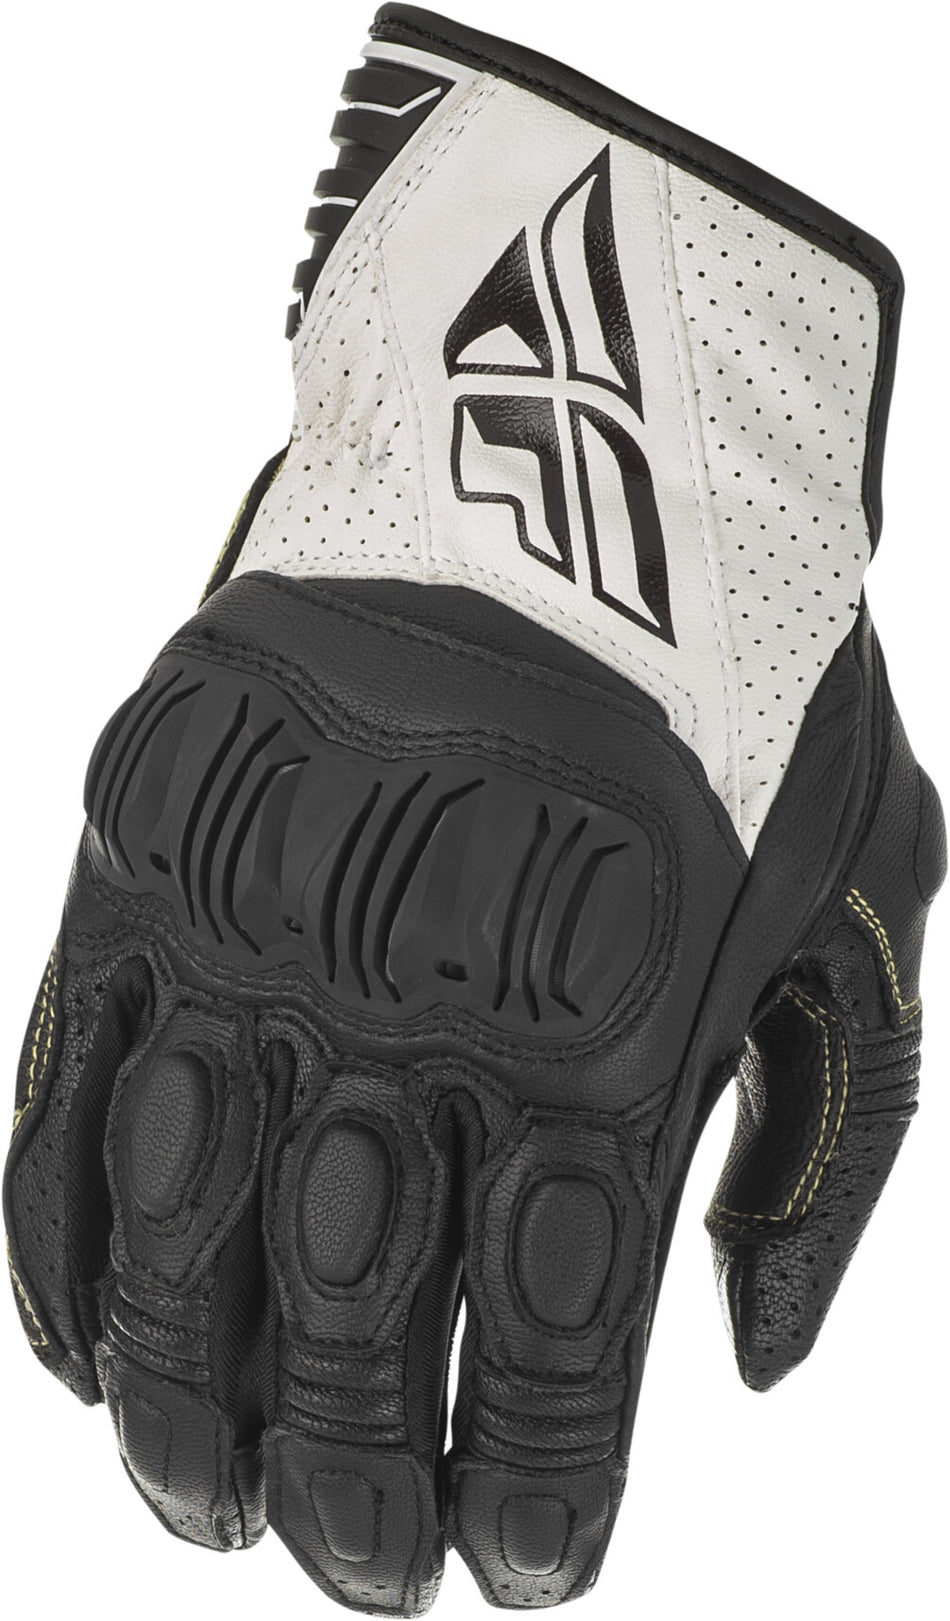 FLY RACING Brawler Gloves Black/White 3x 476-20933X